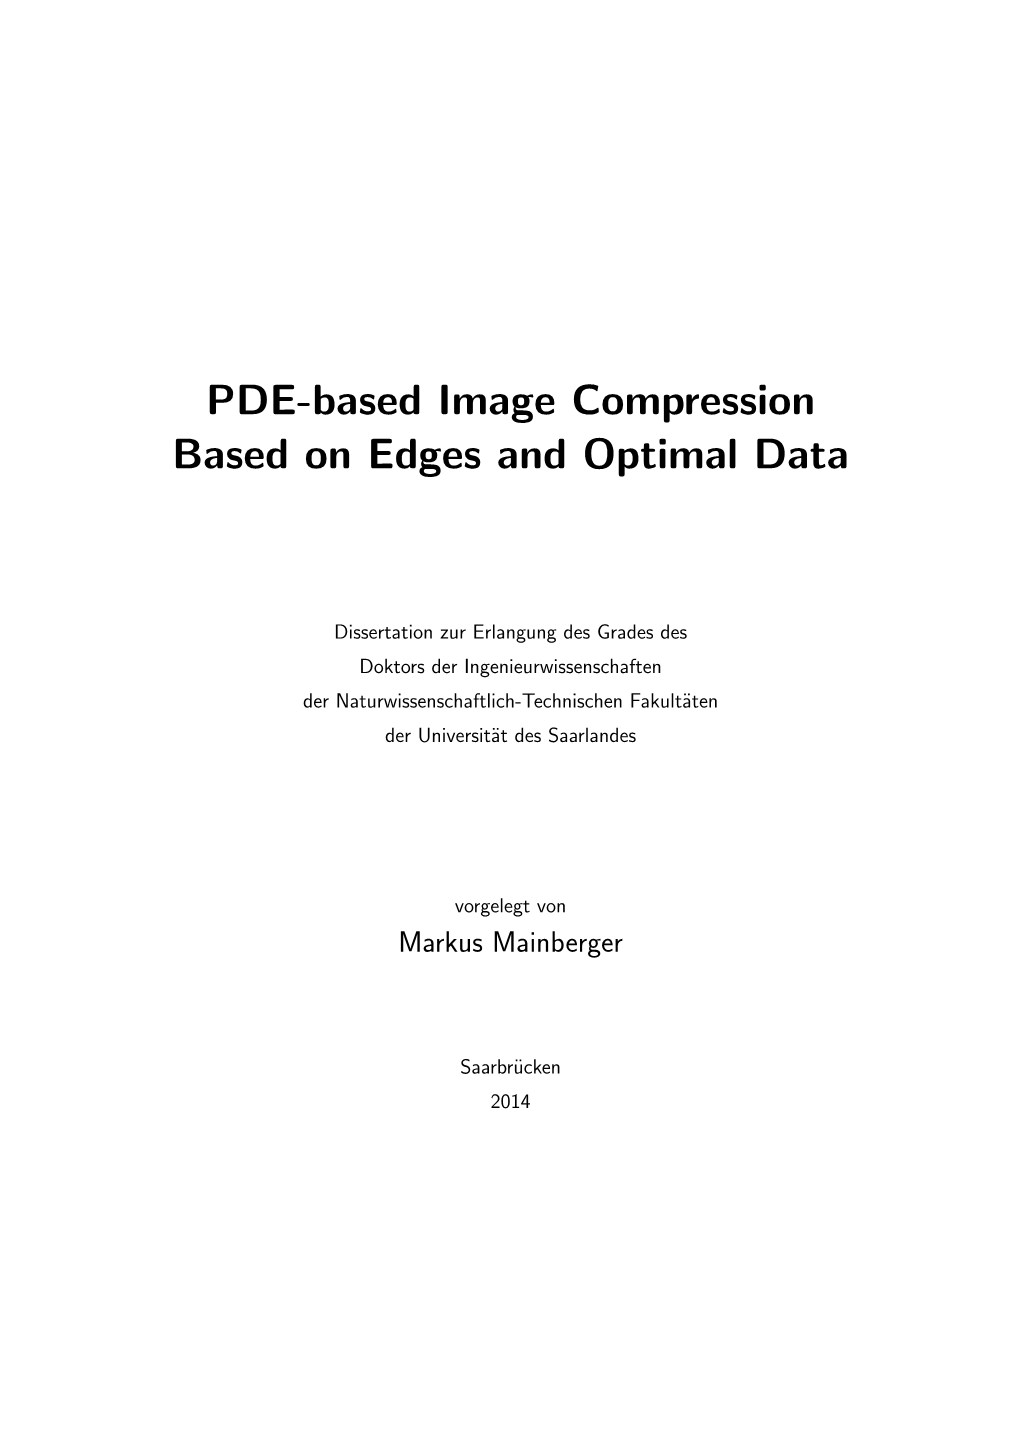 PDE-Based Image Compression Based on Edges and Optimal Data